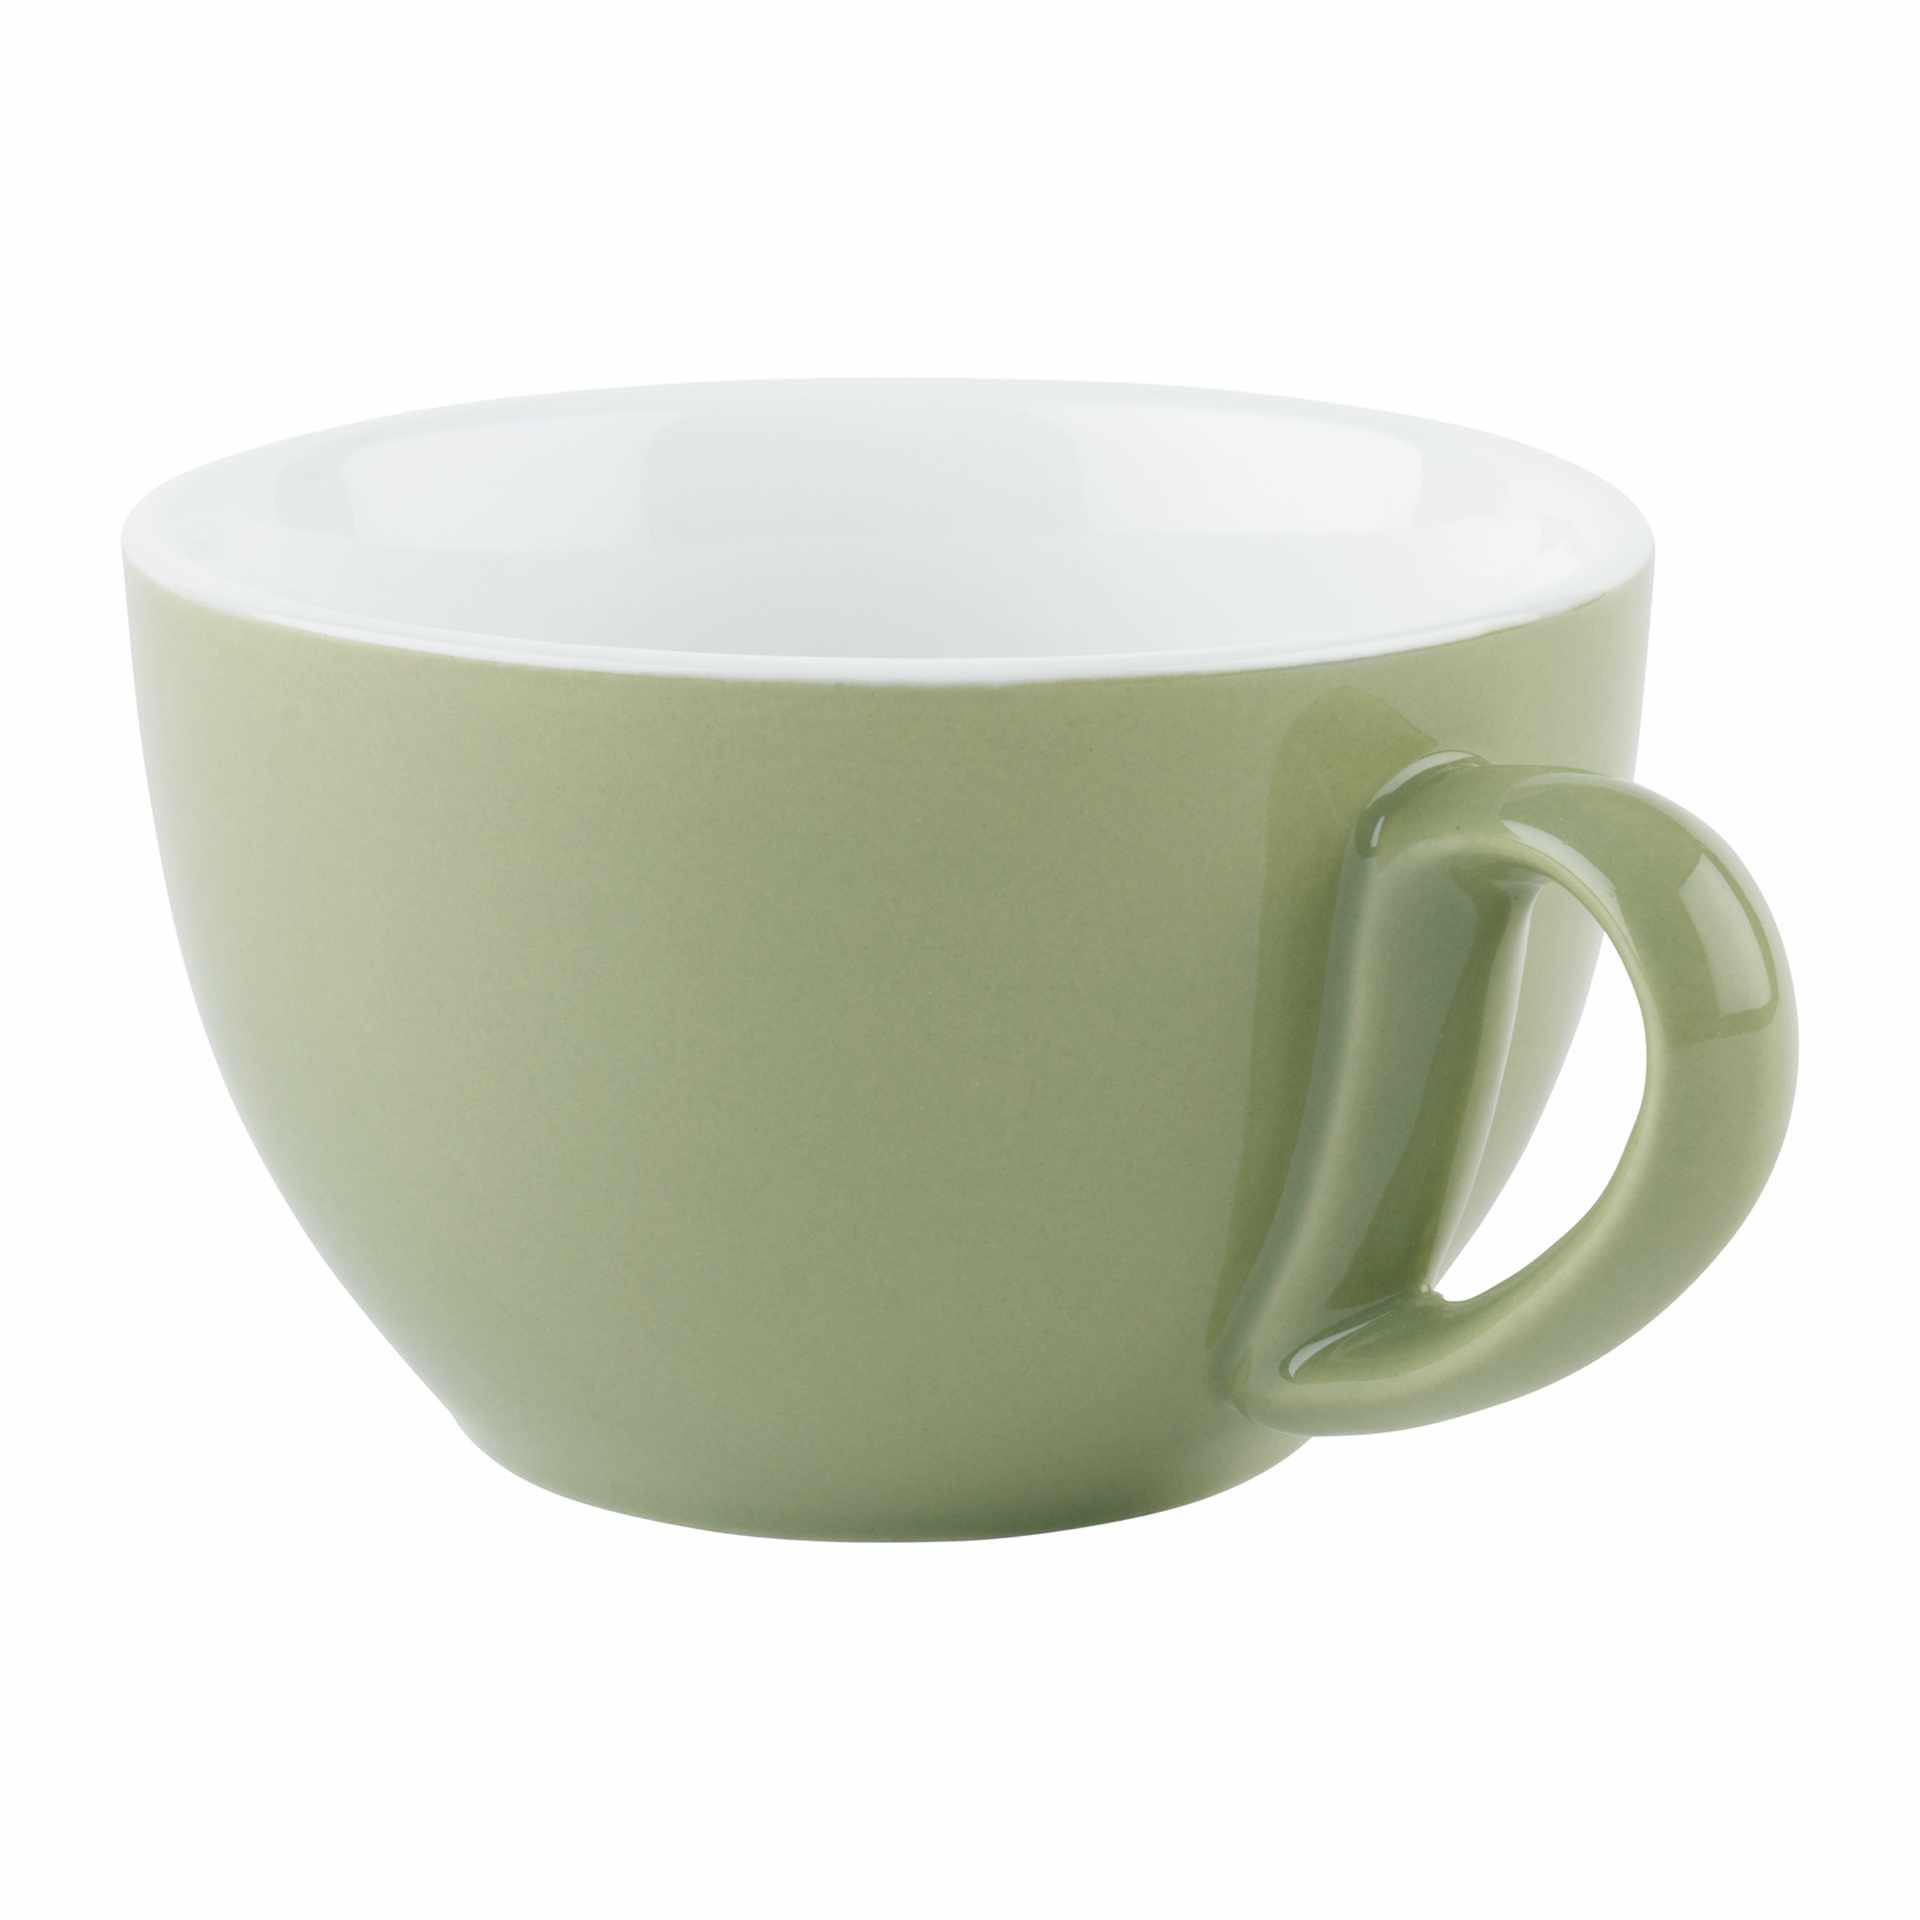 Cappuccino-Tasse - Serie Snug - grün - Höhe 6,5 cm - Ø 10,5 cm - Inhalt 0,30 l - Porzellan - 16007-B